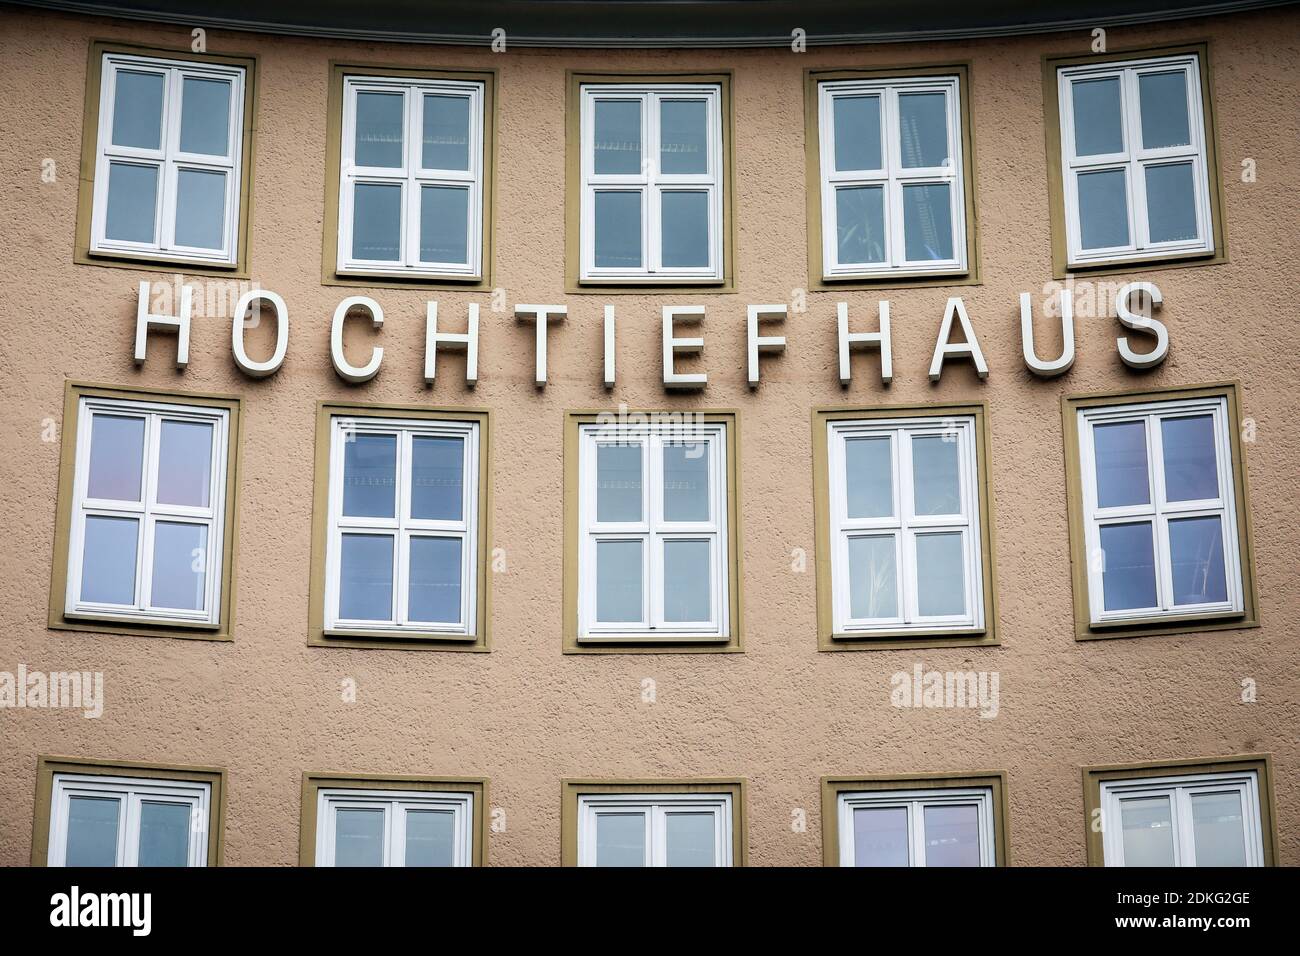 Essen, North Rhine-Westphalia, Germany - Hochtiefhaus, headquarters of Hochtief AG on Opernplatz, the Hochtiefhaus is the headquarters of the Hochtief construction company Stock Photo